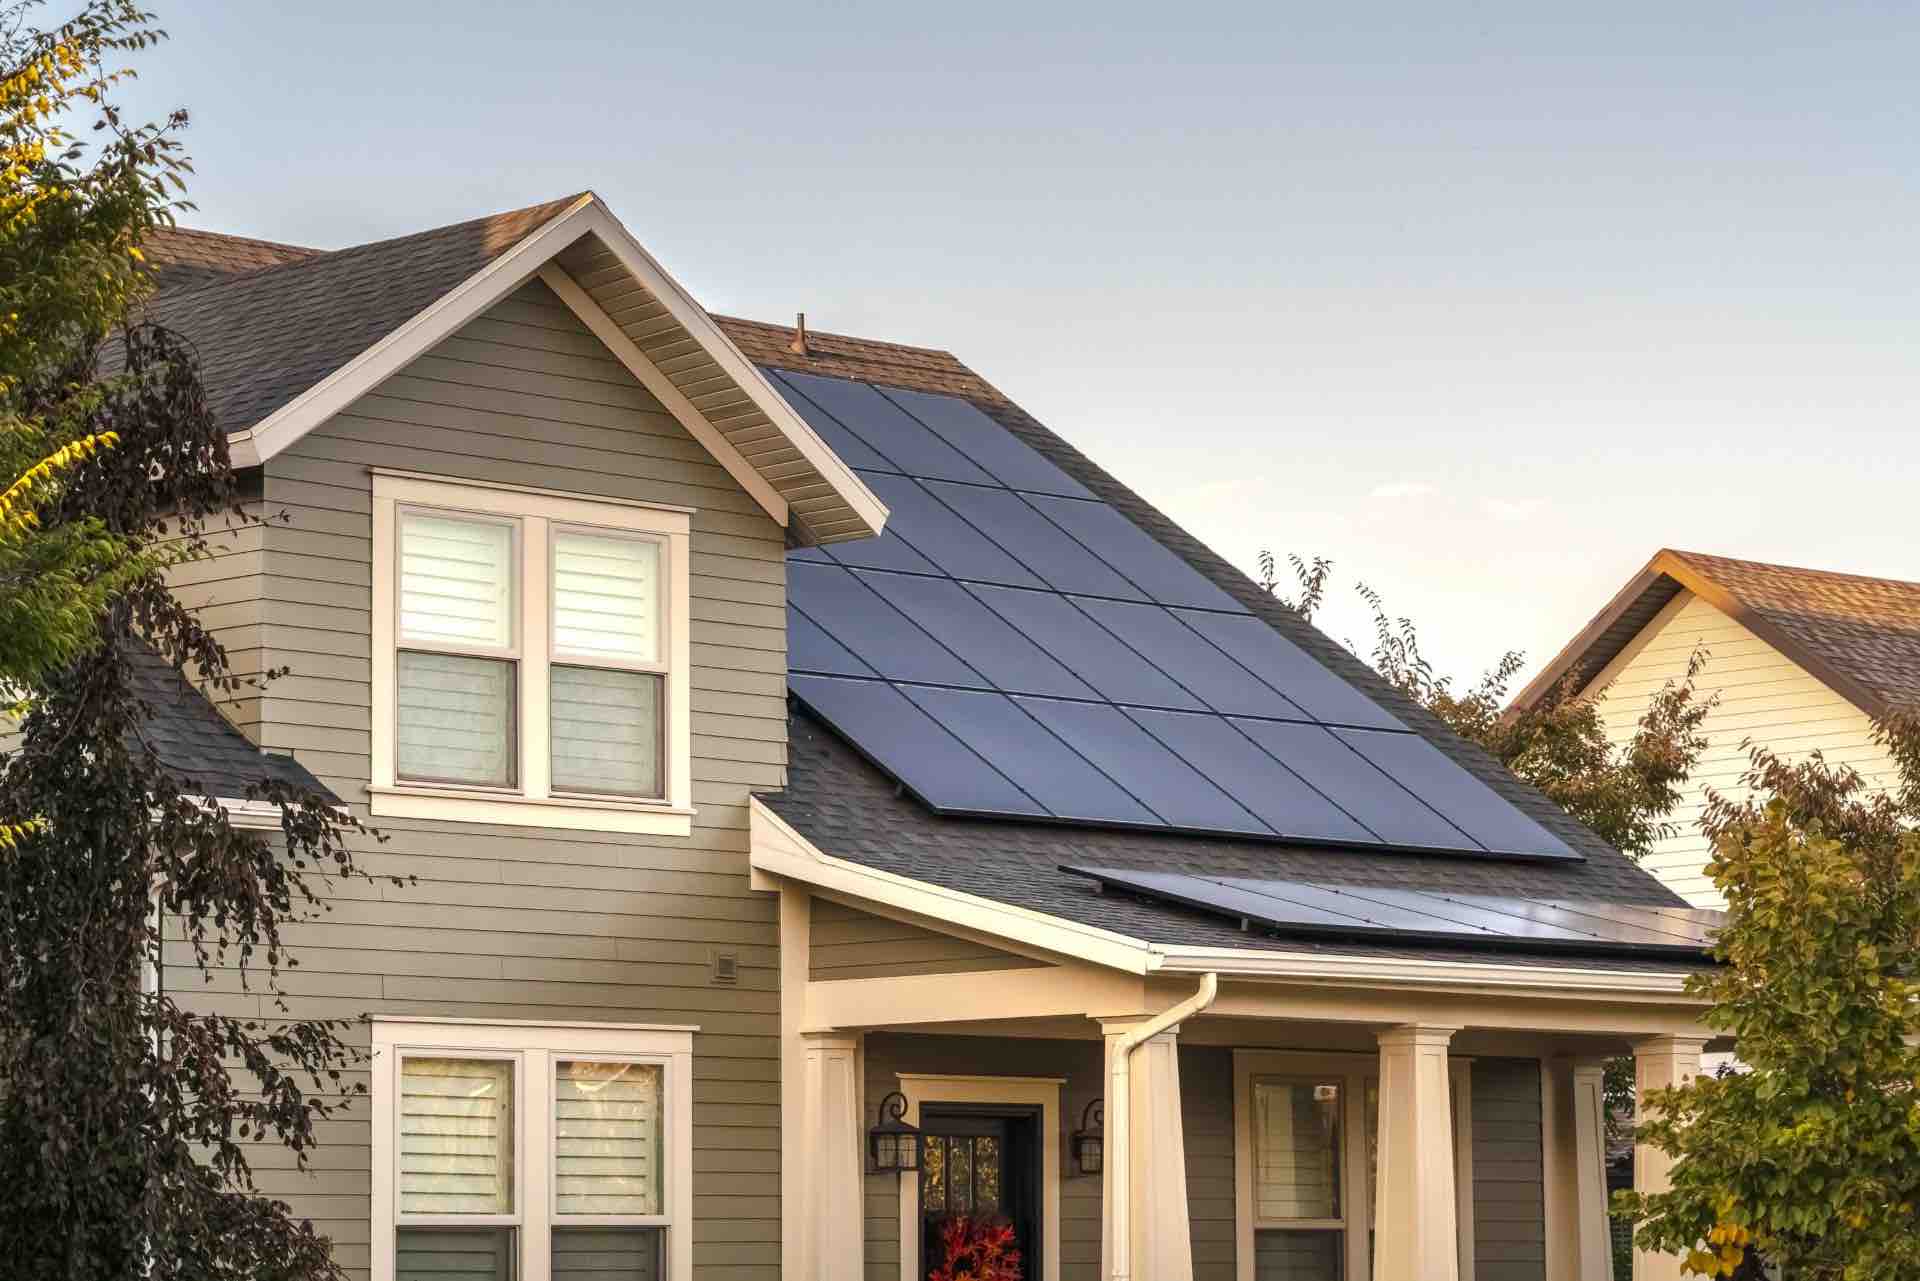 Solar Installers - All Star Roofing and Solar, Roofing Installation, Solar Installation, Serving Austin TX, El Paso TX, Houston TX, San Antonio TX, Dallas TX, Converse TX